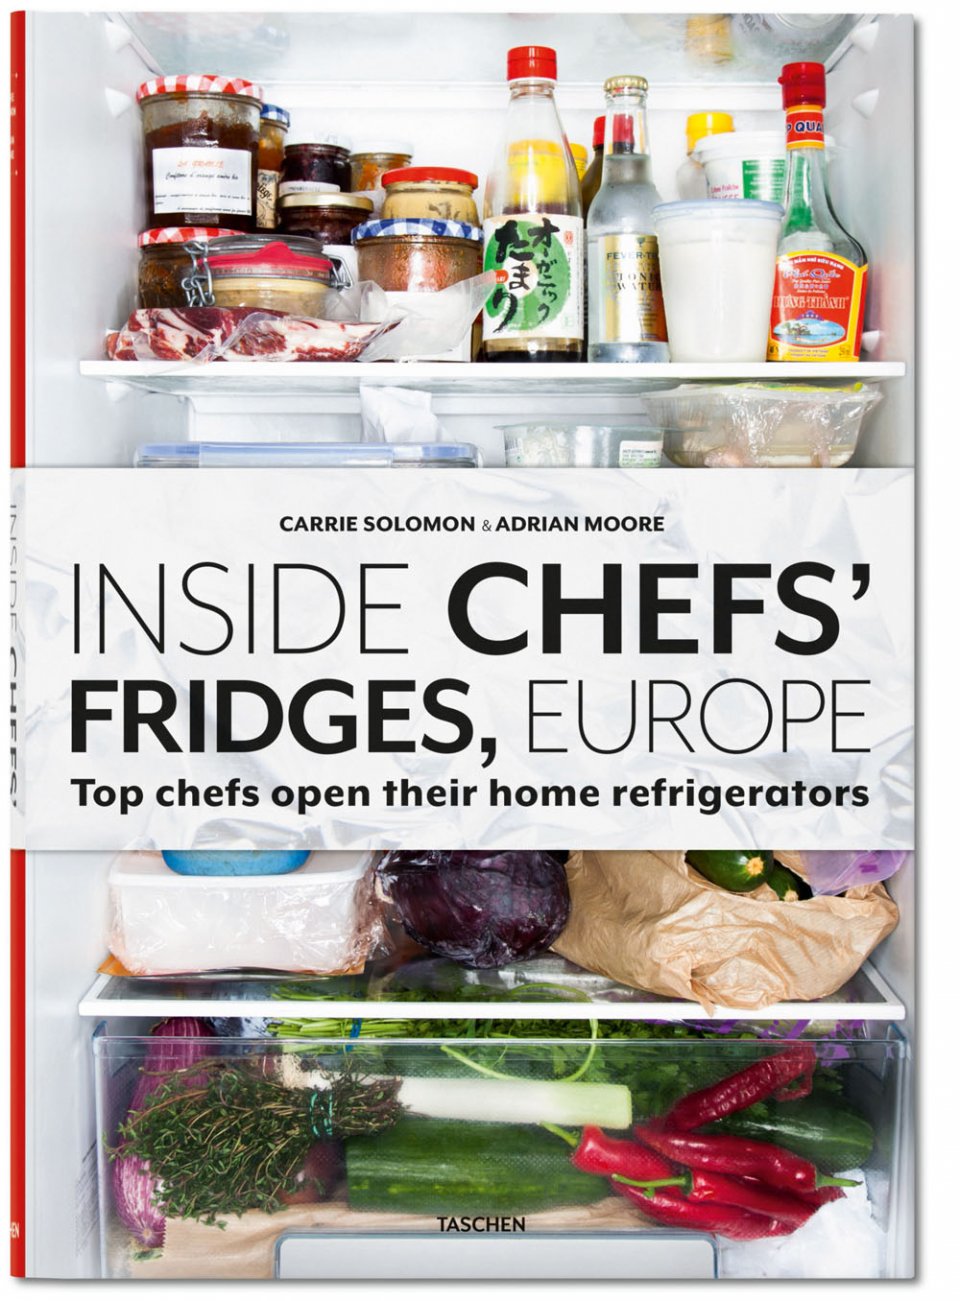 inside_chefs_fridges_europe_va_gb_3d_04619_1508121142_id_988058